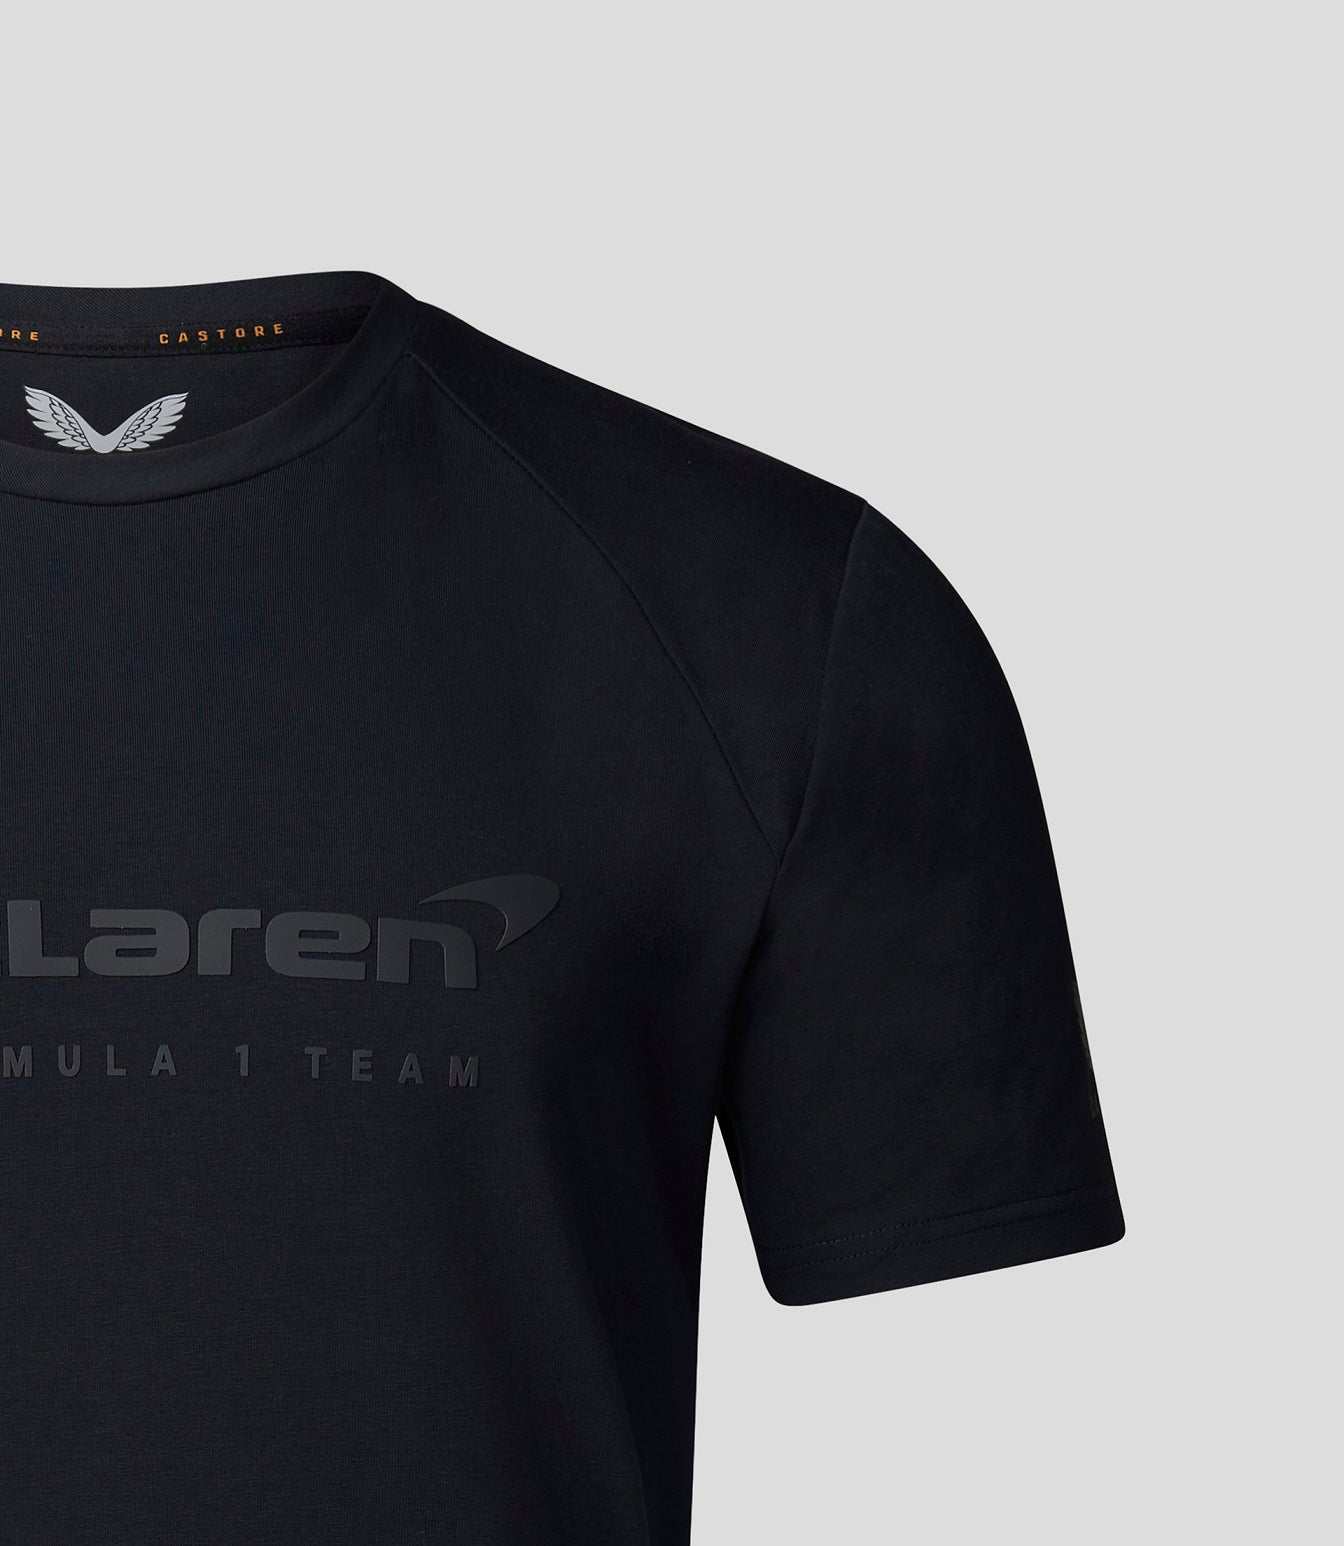 McLaren Dual Brand T-Shirt Black